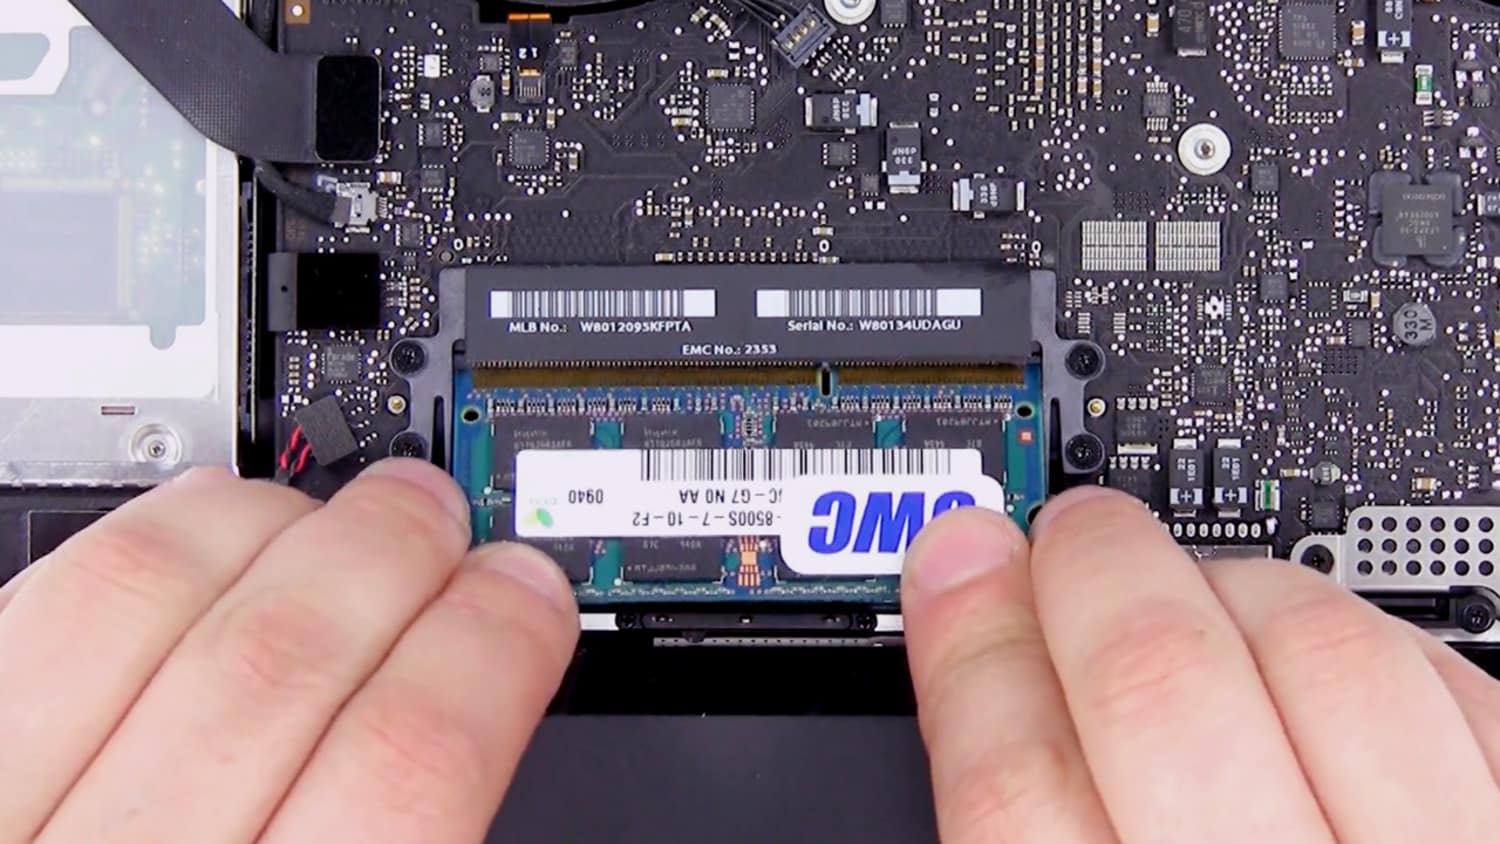 søn Skov hoste MacBook Pro Memory Upgrade Kits (2008, 2009 and 2010)